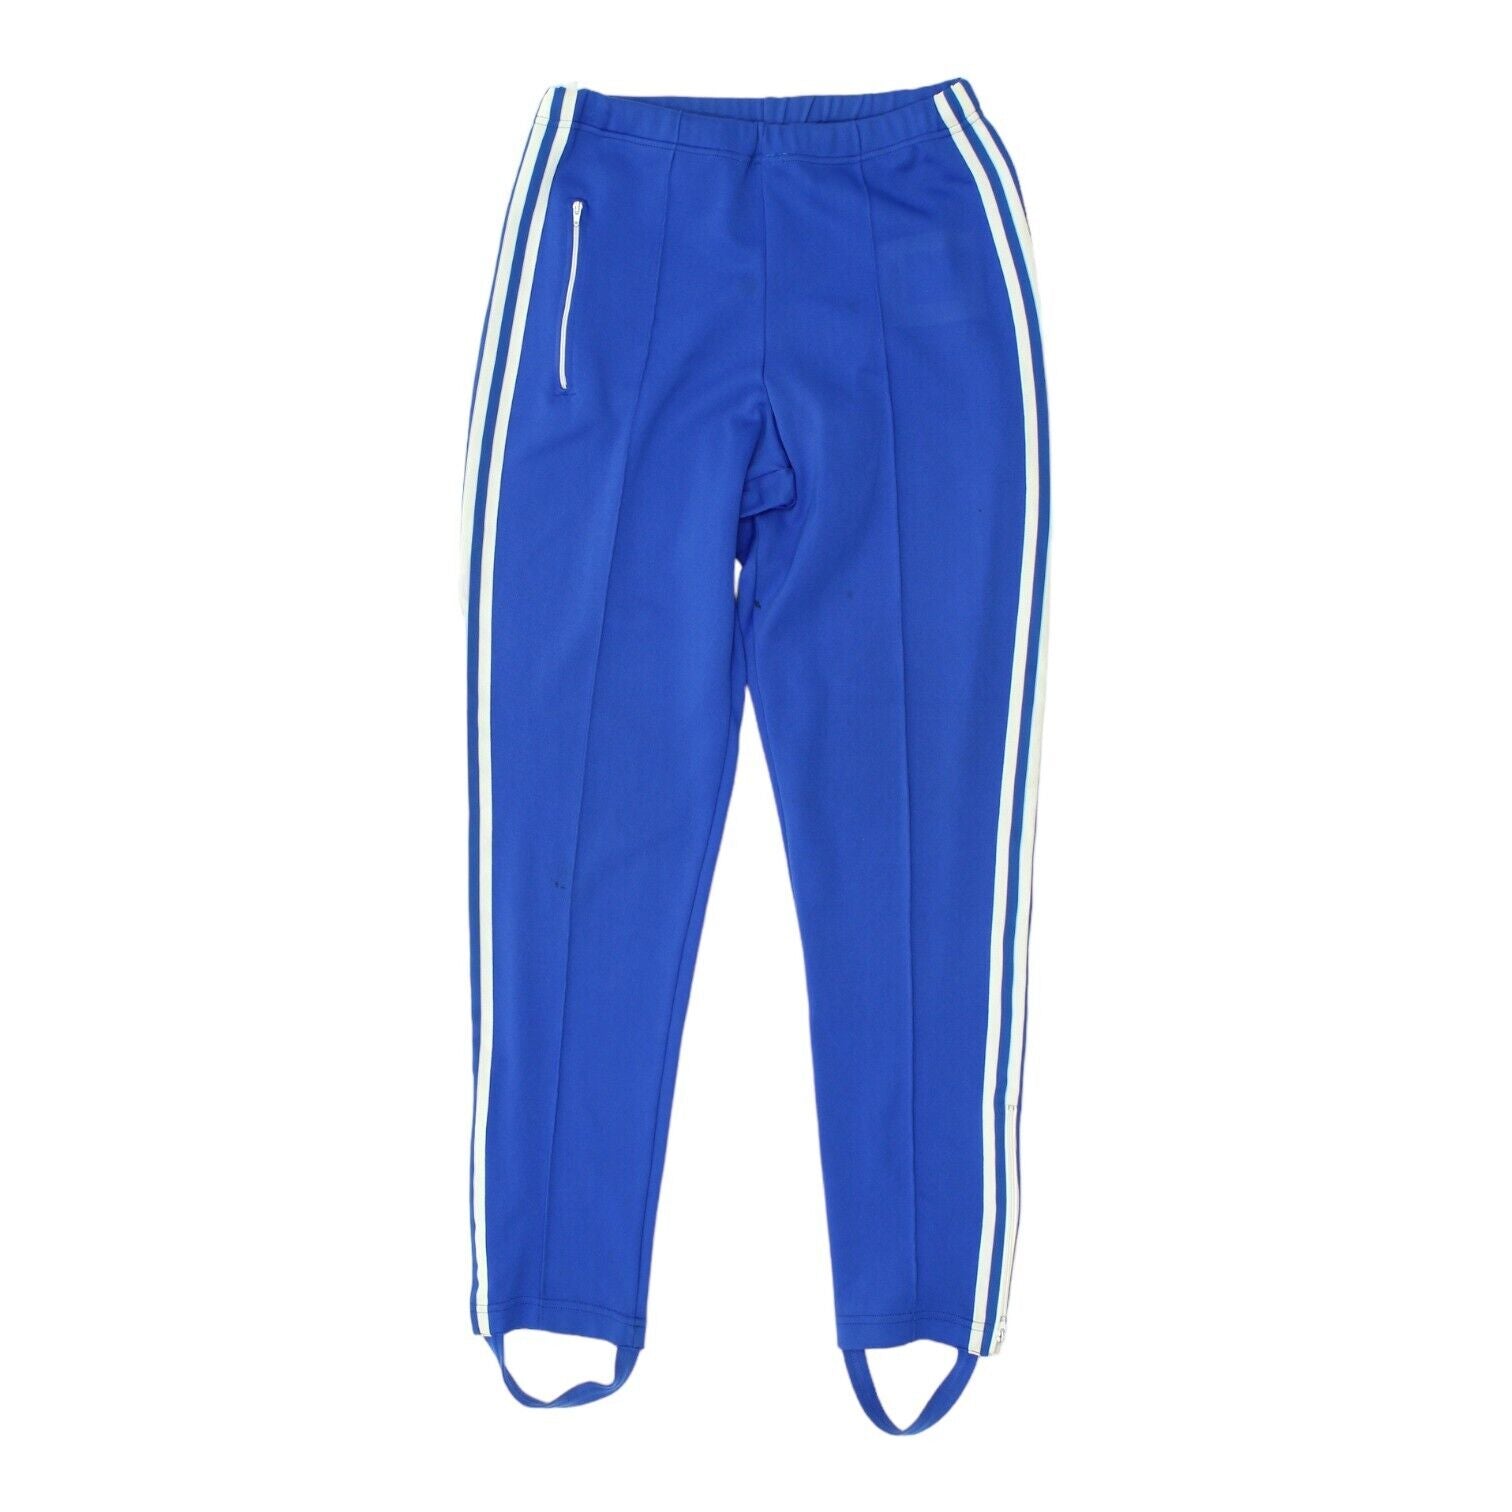 Adidas Mens Blue Stirrup Trousers, Vintage 80s Sportswear Track Pants VTG, Vintage & Second-Hand Clothing Online